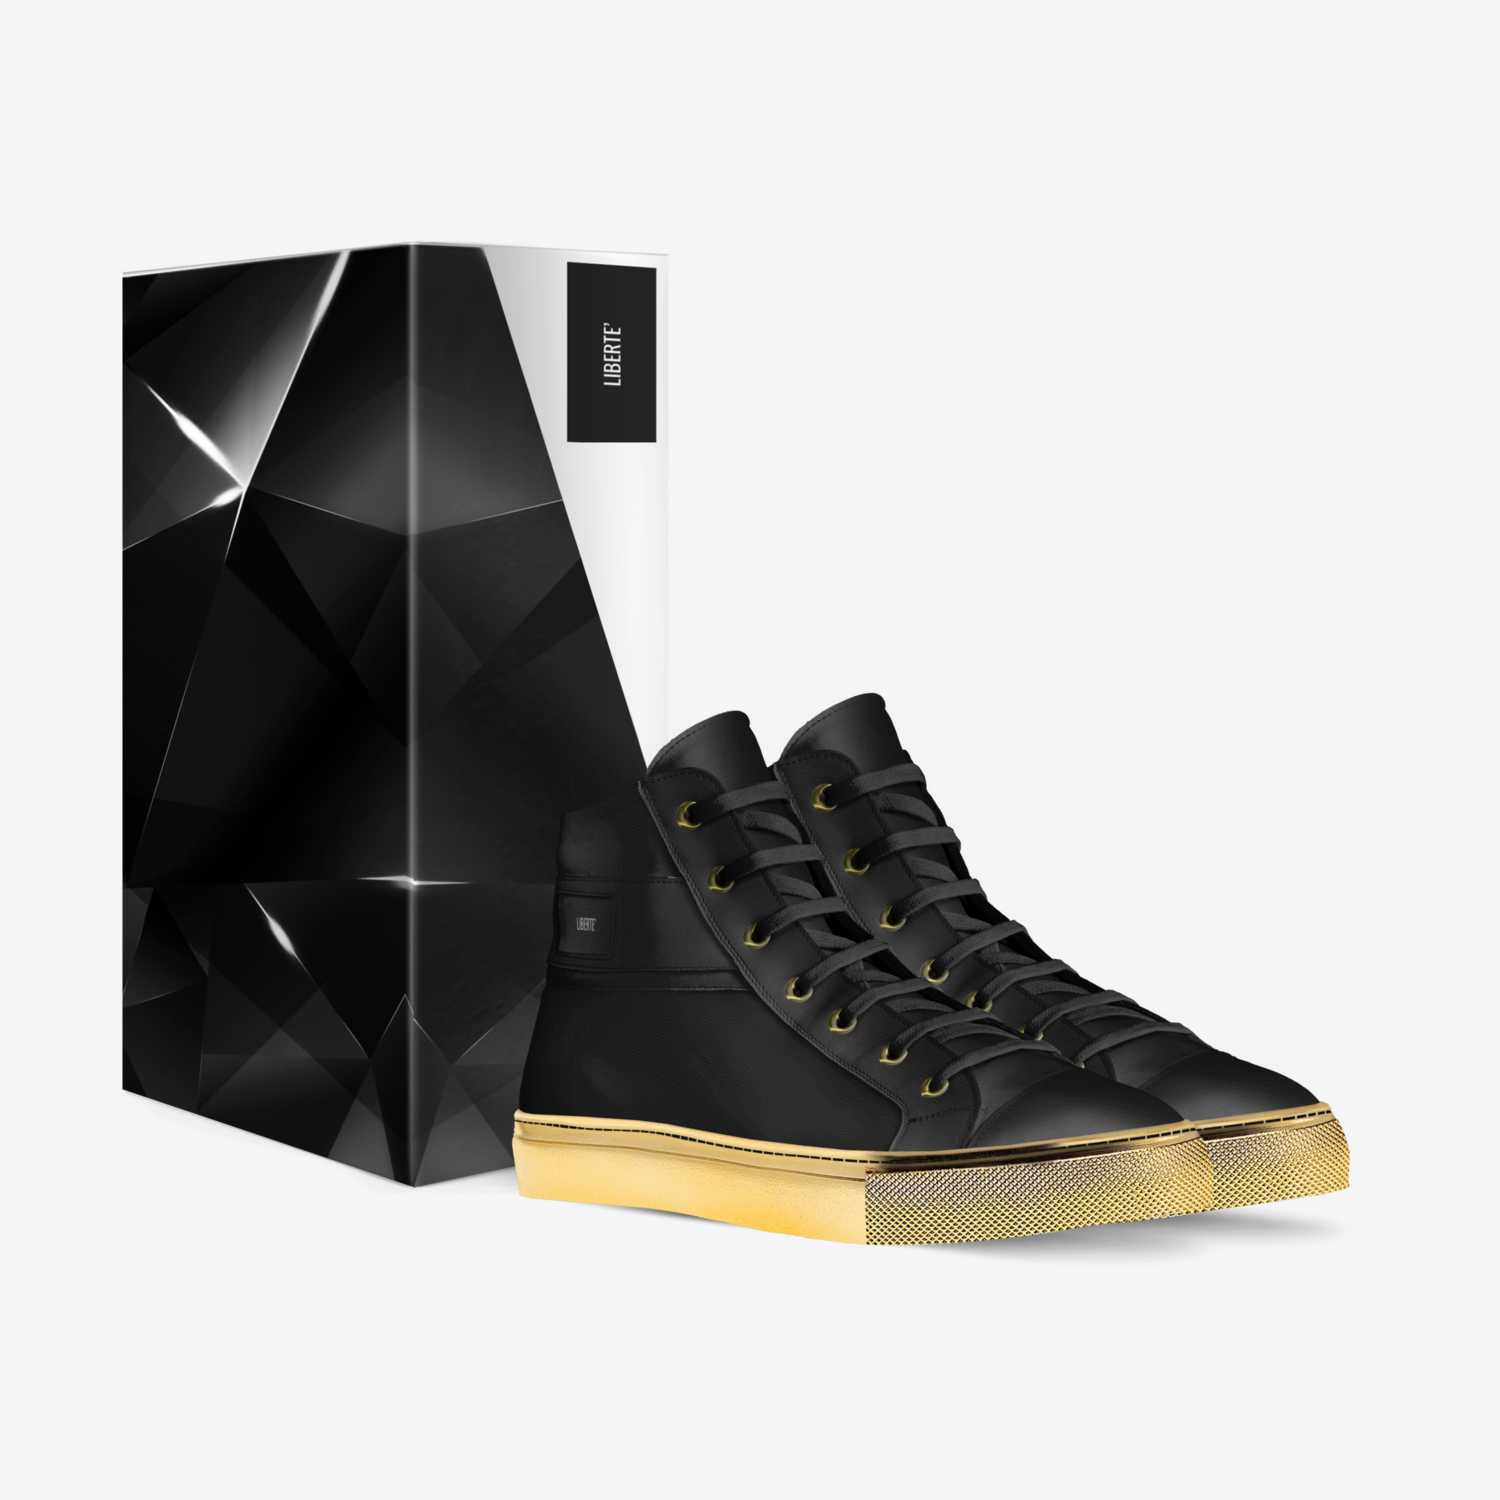 Liberte' custom made in Italy shoes by Nejma Nefertiti | Box view